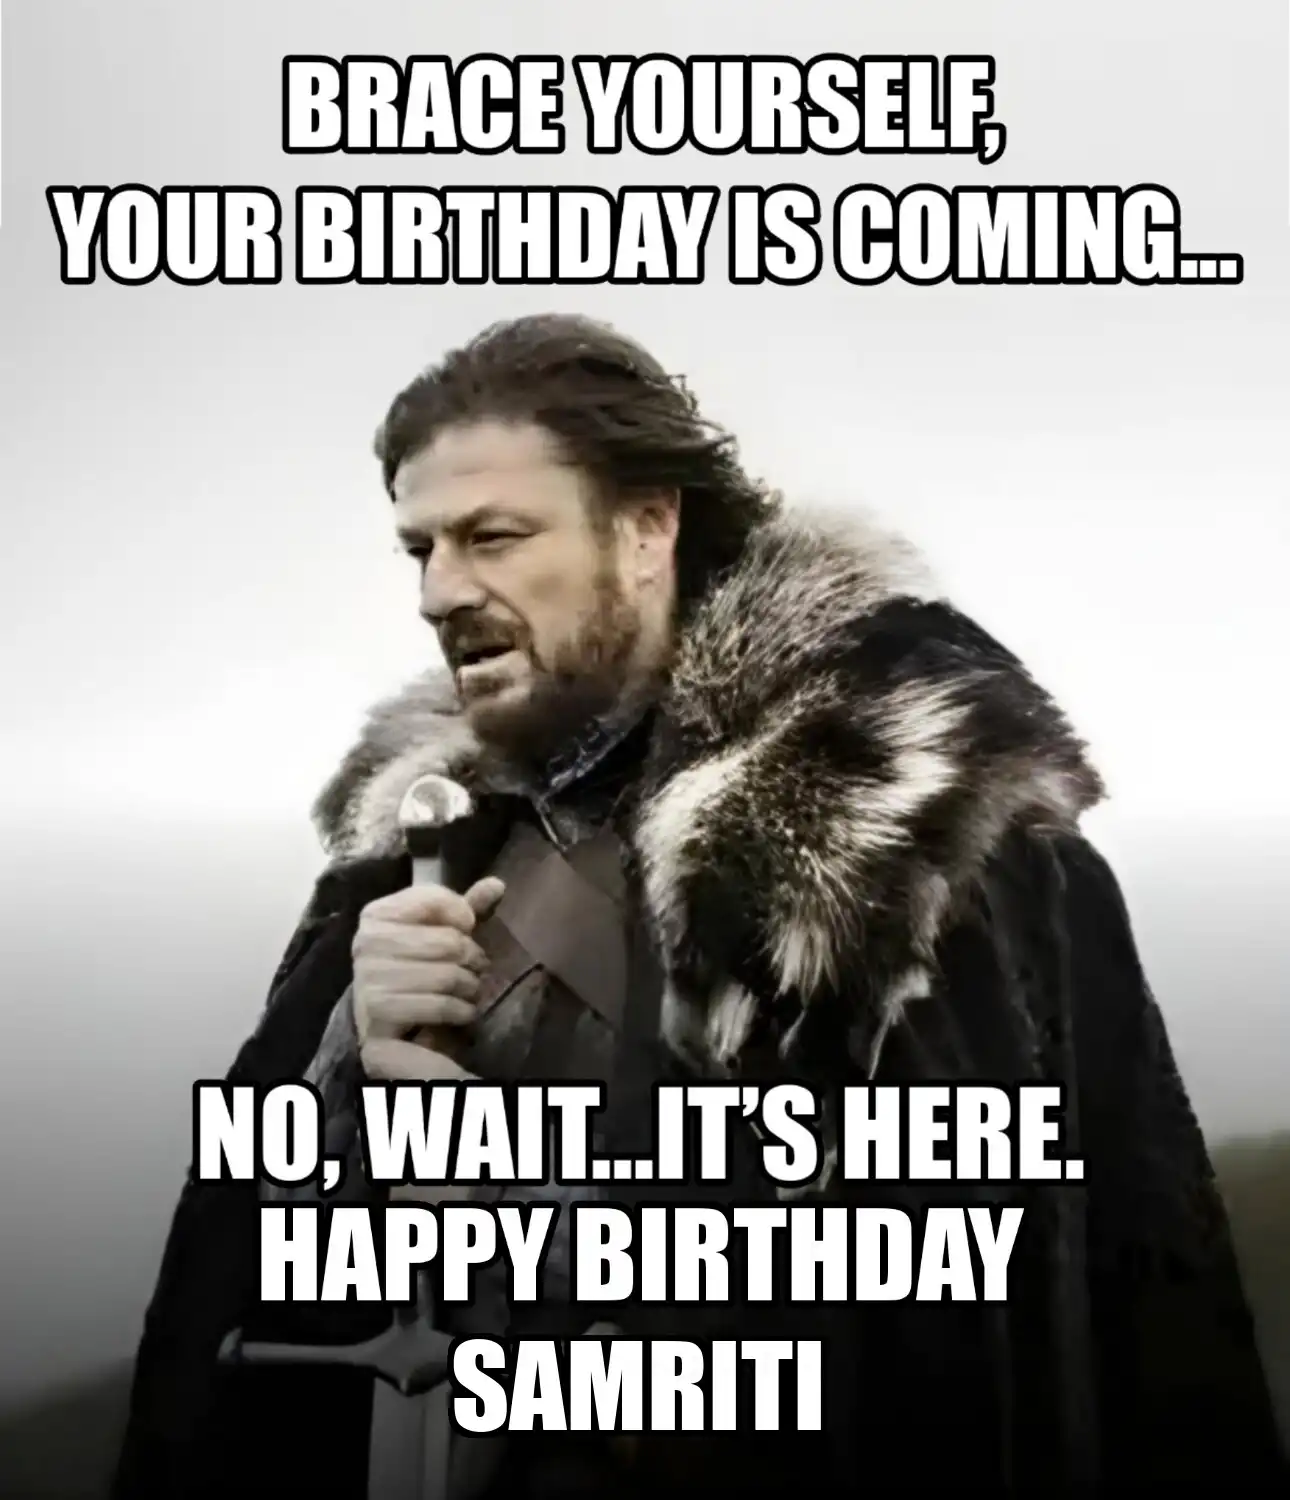 Happy Birthday Samriti Brace Yourself Your Birthday Is Coming Meme